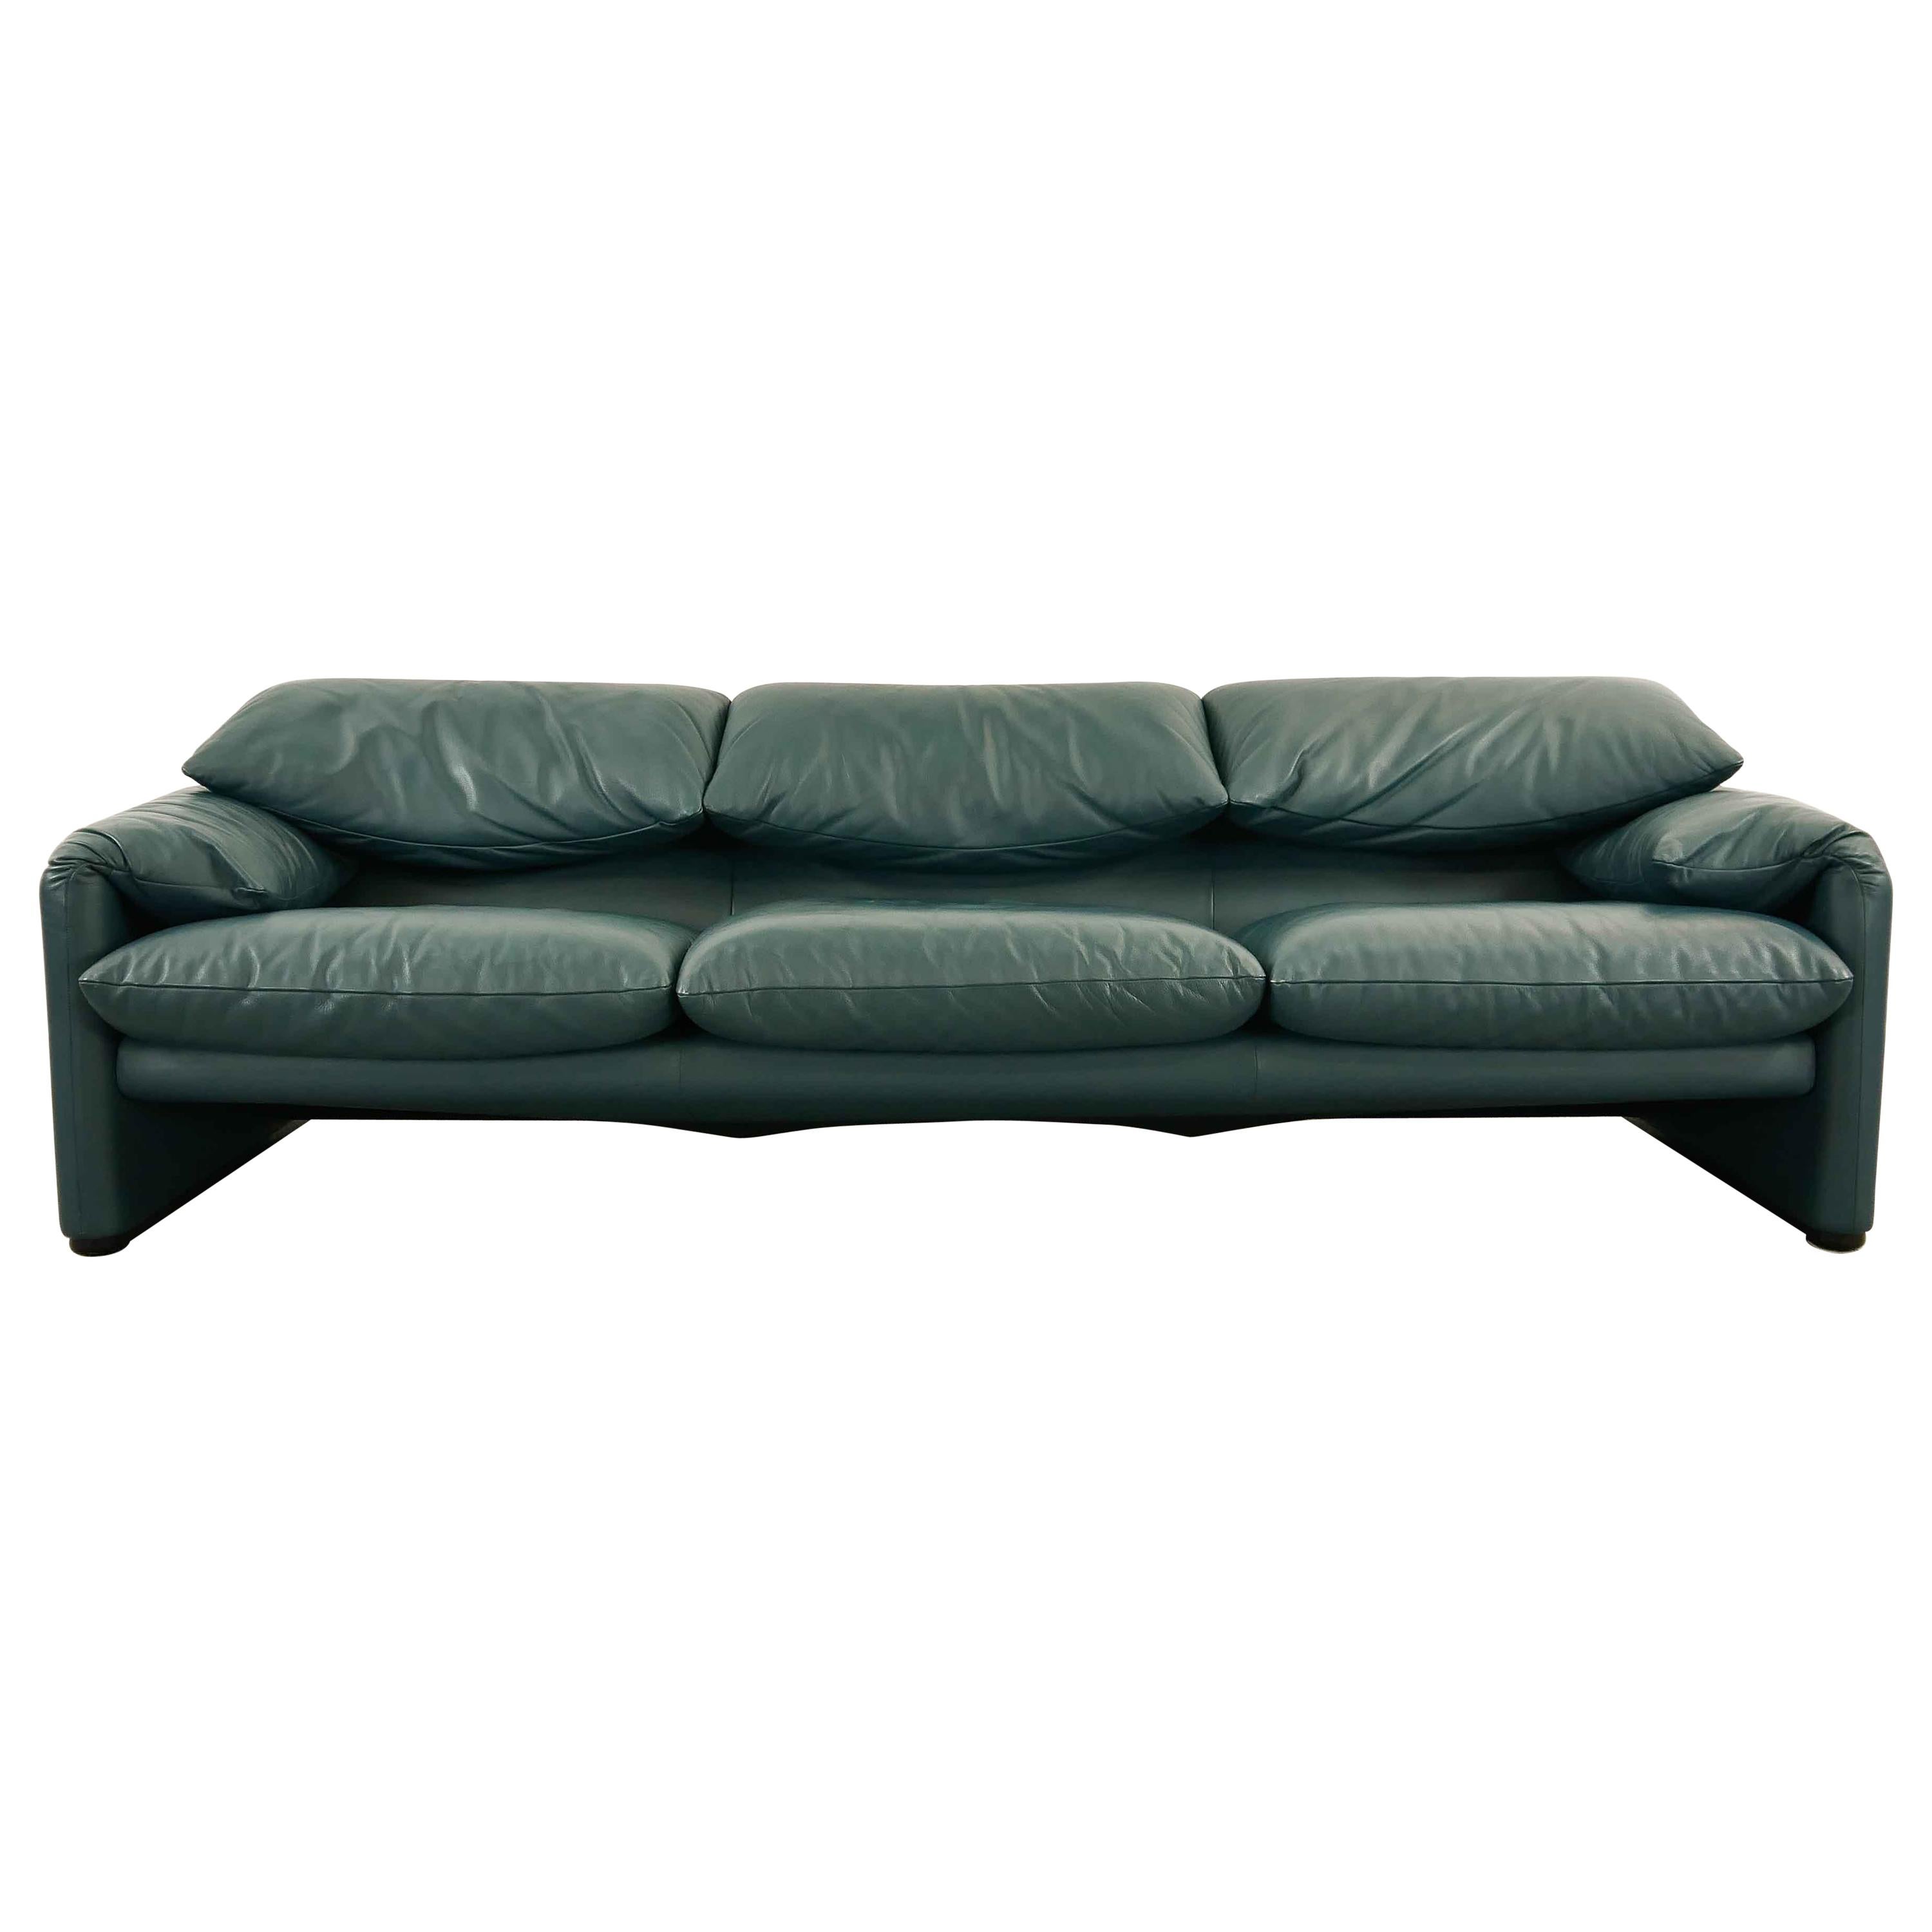 Cassina Maralunga 3-Seat Sofa by Vico Magistretti in Petrol-Darkgreen Leather